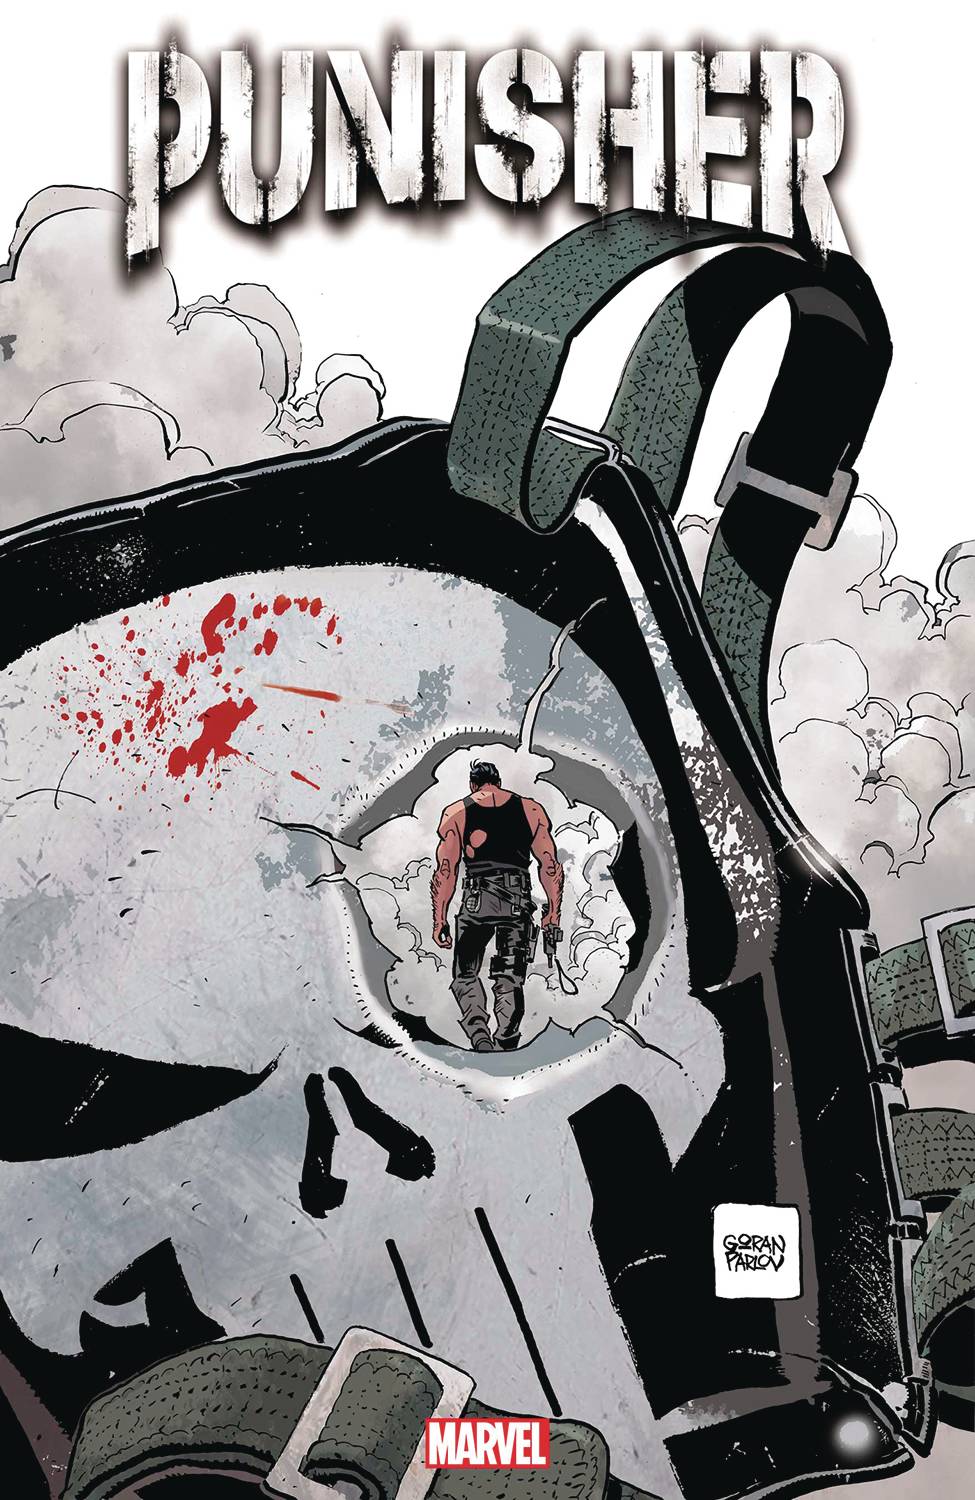 Punisher #1 (Cover - Parlov)